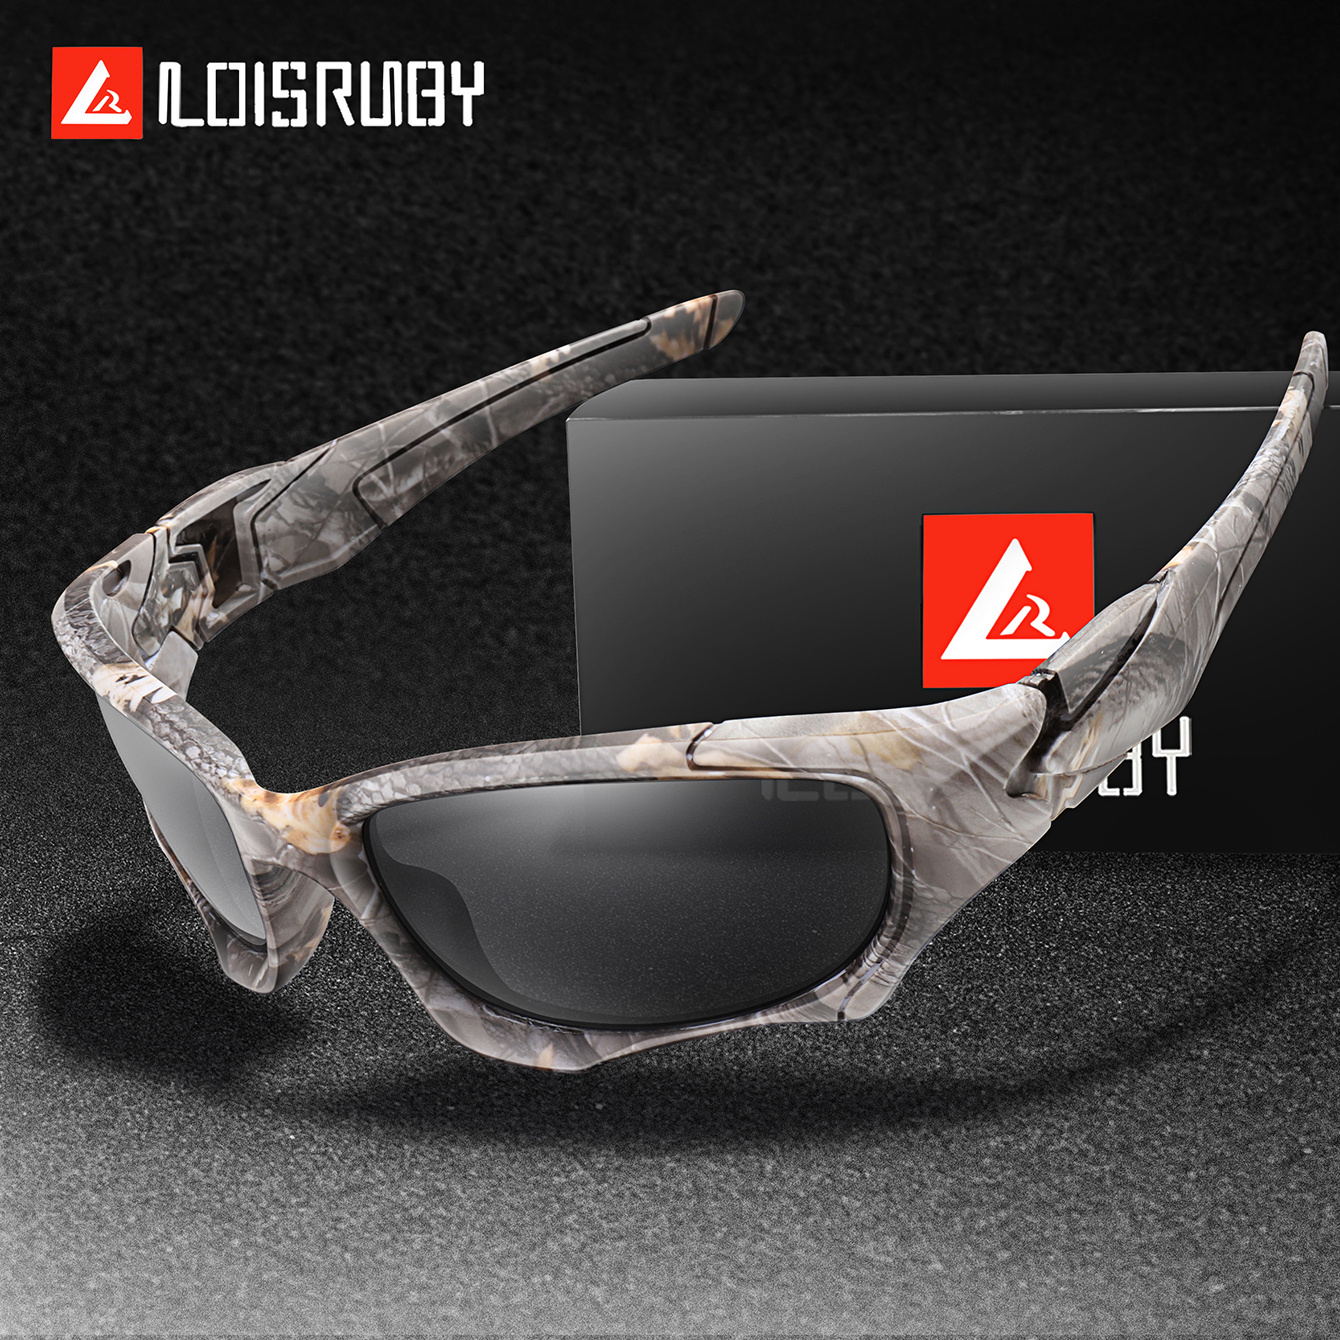 Premium Cool Camouflage Frame Wrap Around Polarized Sunglasses For